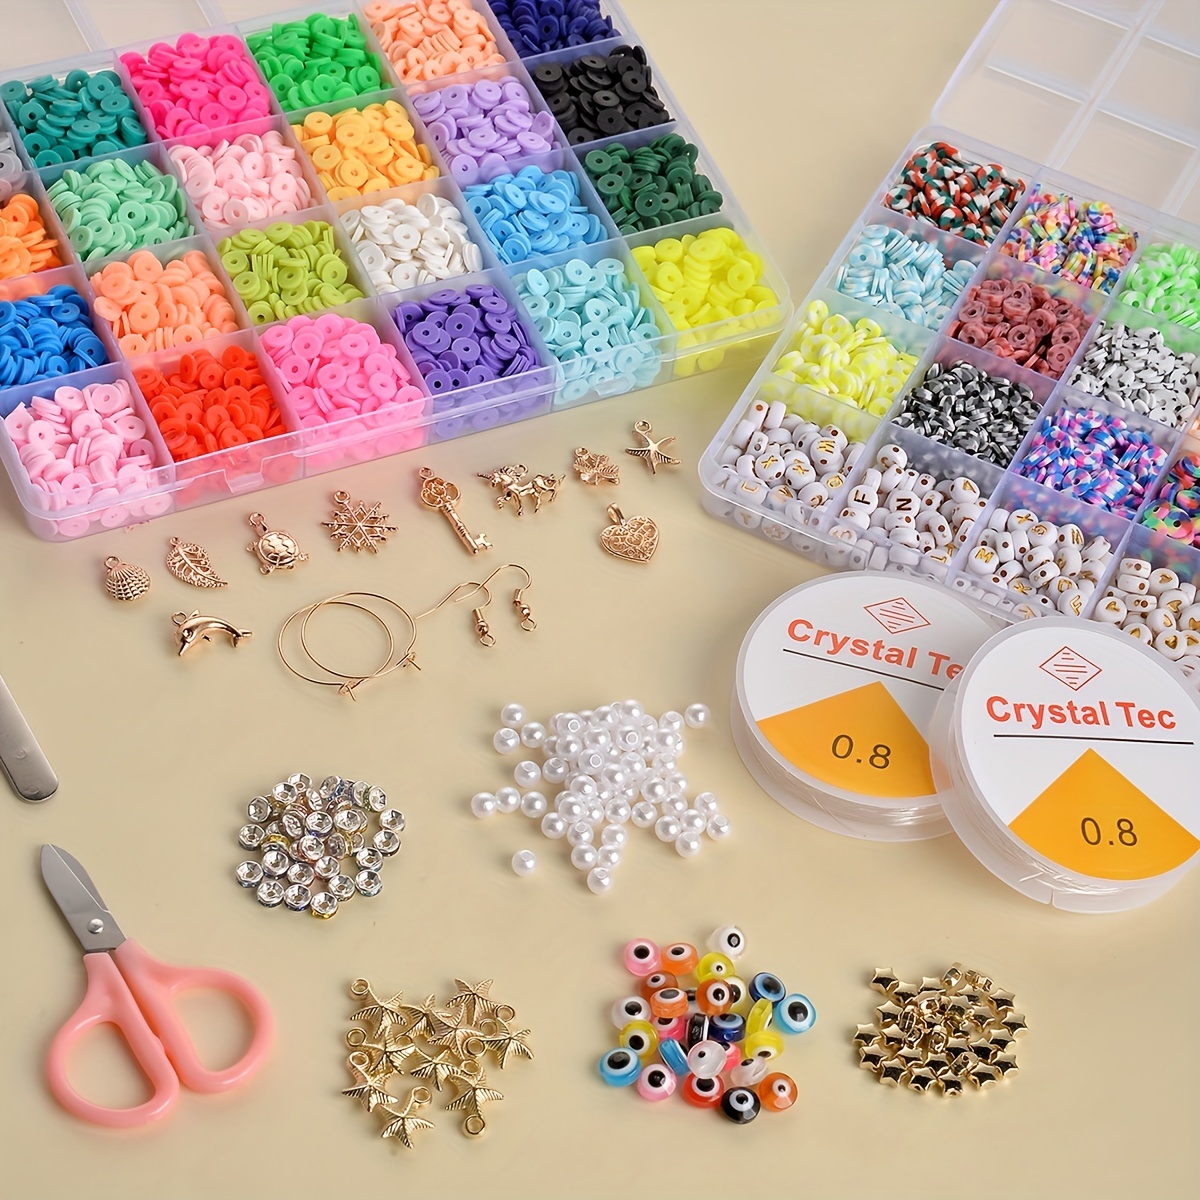 Dulzod 4800Pcs Clay Beads for Jewelry Making Bracelet Kit,Flat